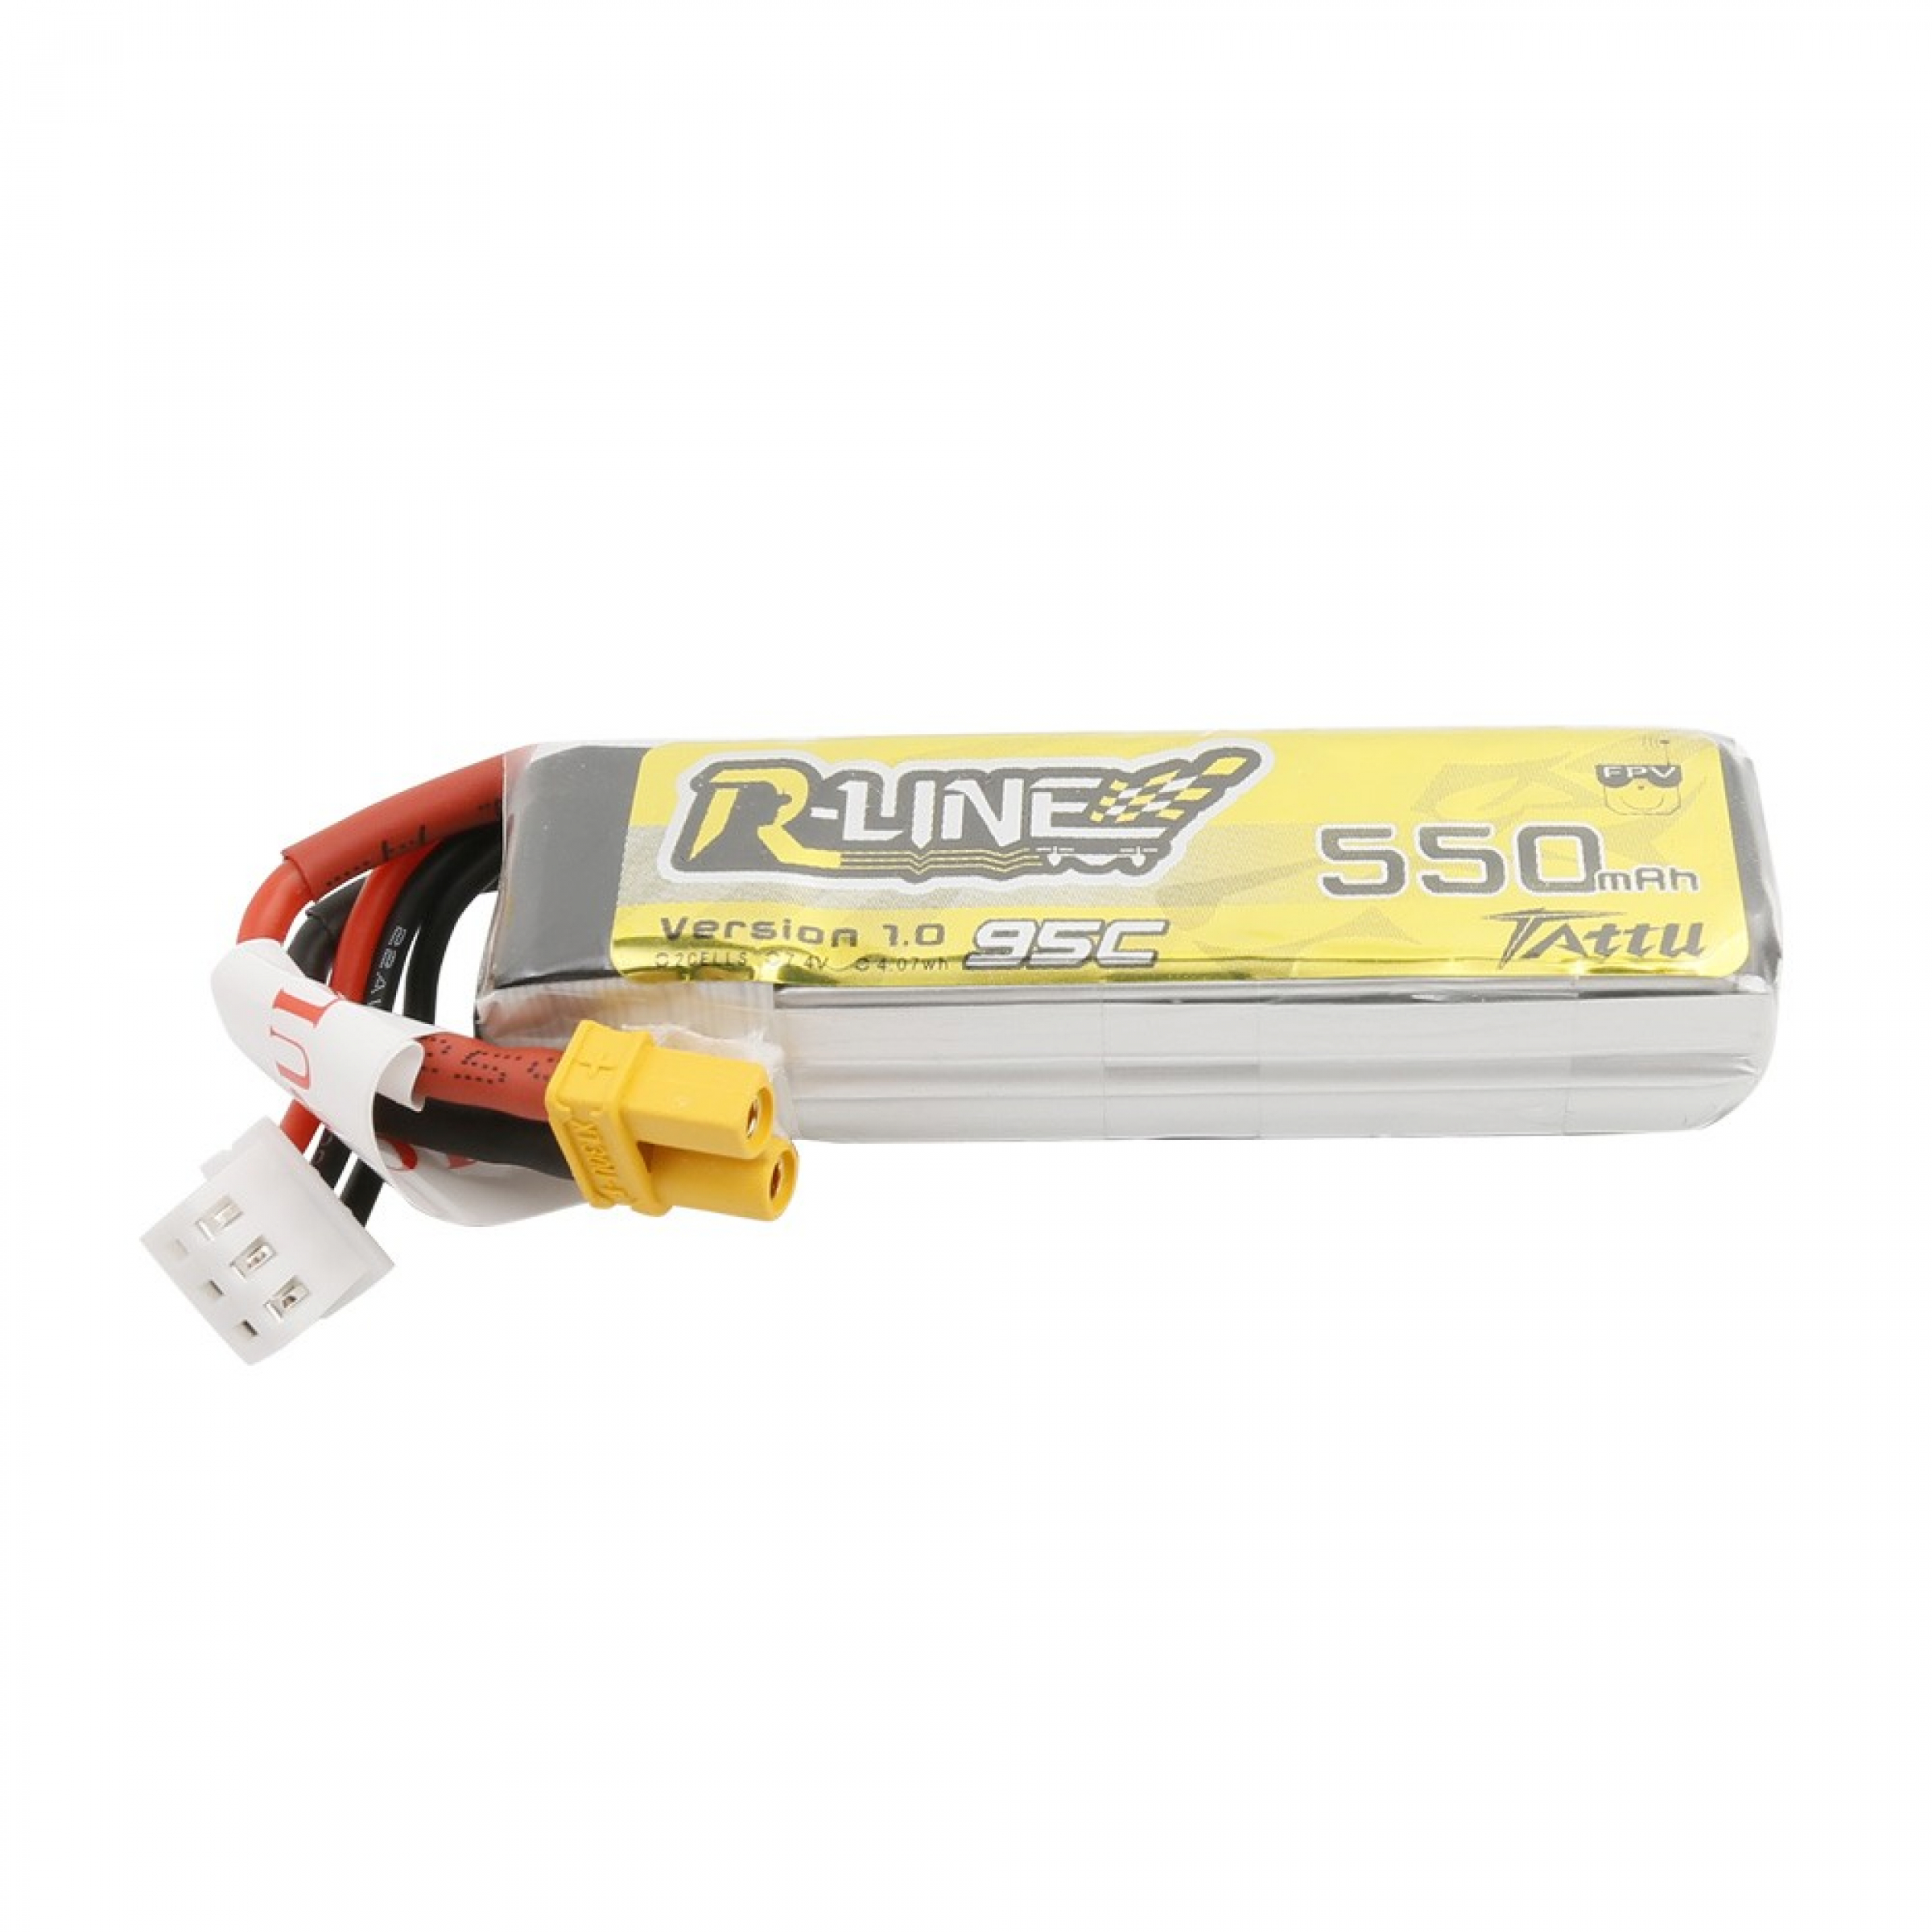 Tattu R-Line 550mAh 7.4V 2S1P 95C Lipo Battery